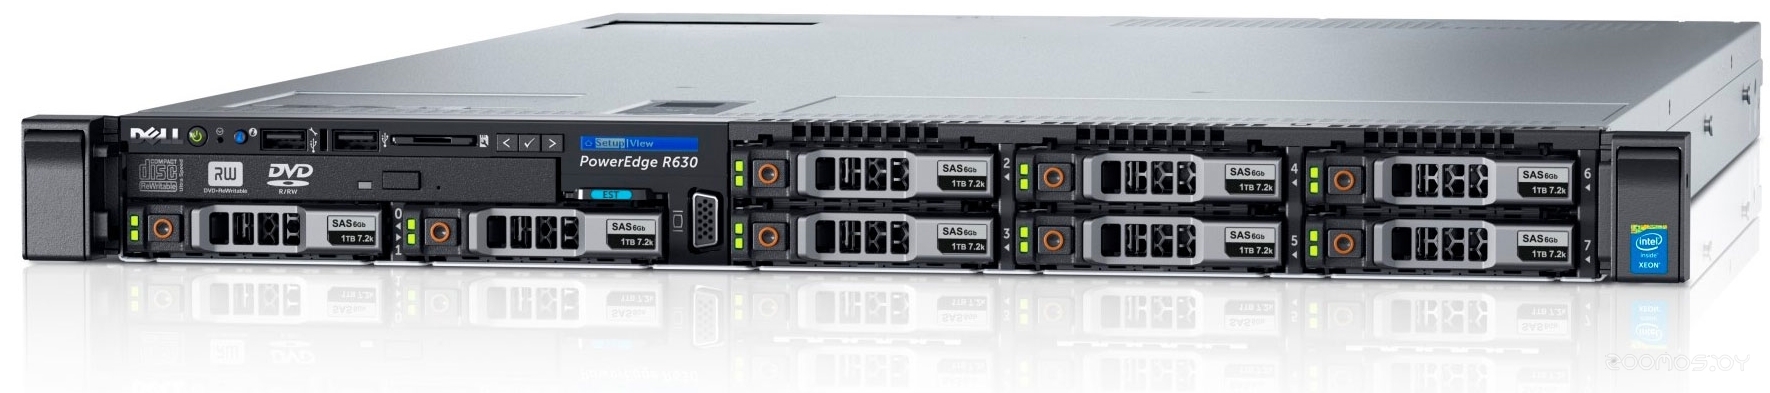   DELL Server E26S PowerEdge R630     